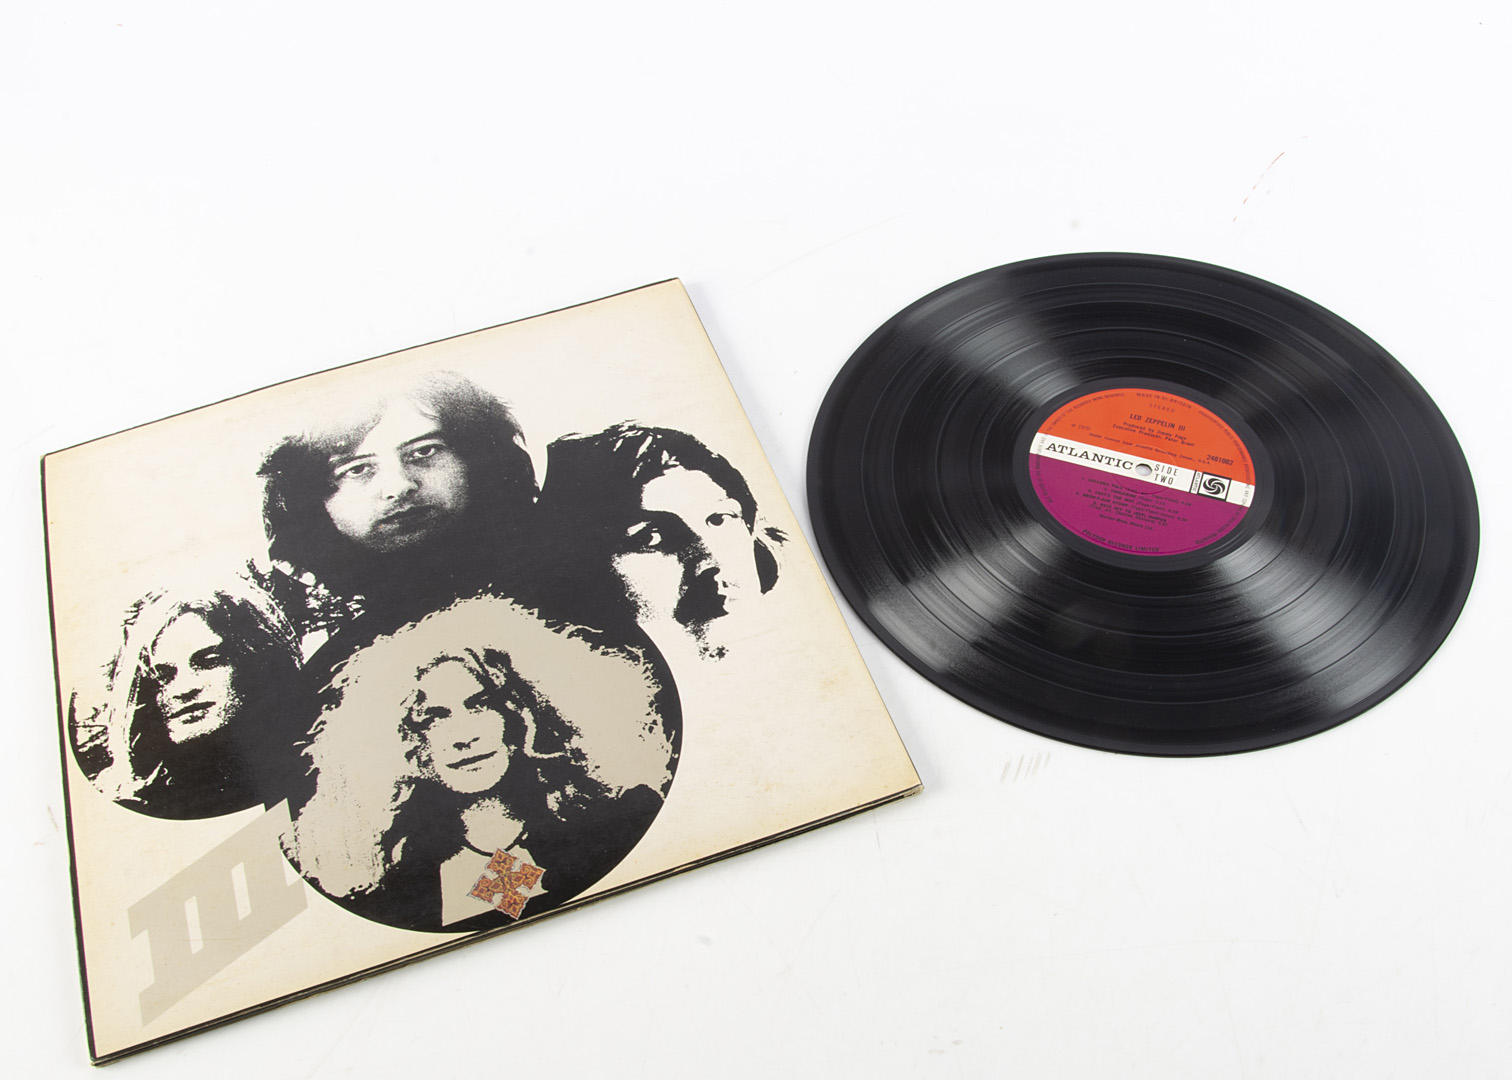 Led Zeppelin LP, Led Zeppelin III LP - Original UK First Press Release 1970 on Atlantic (2401002) A5 - Image 2 of 2